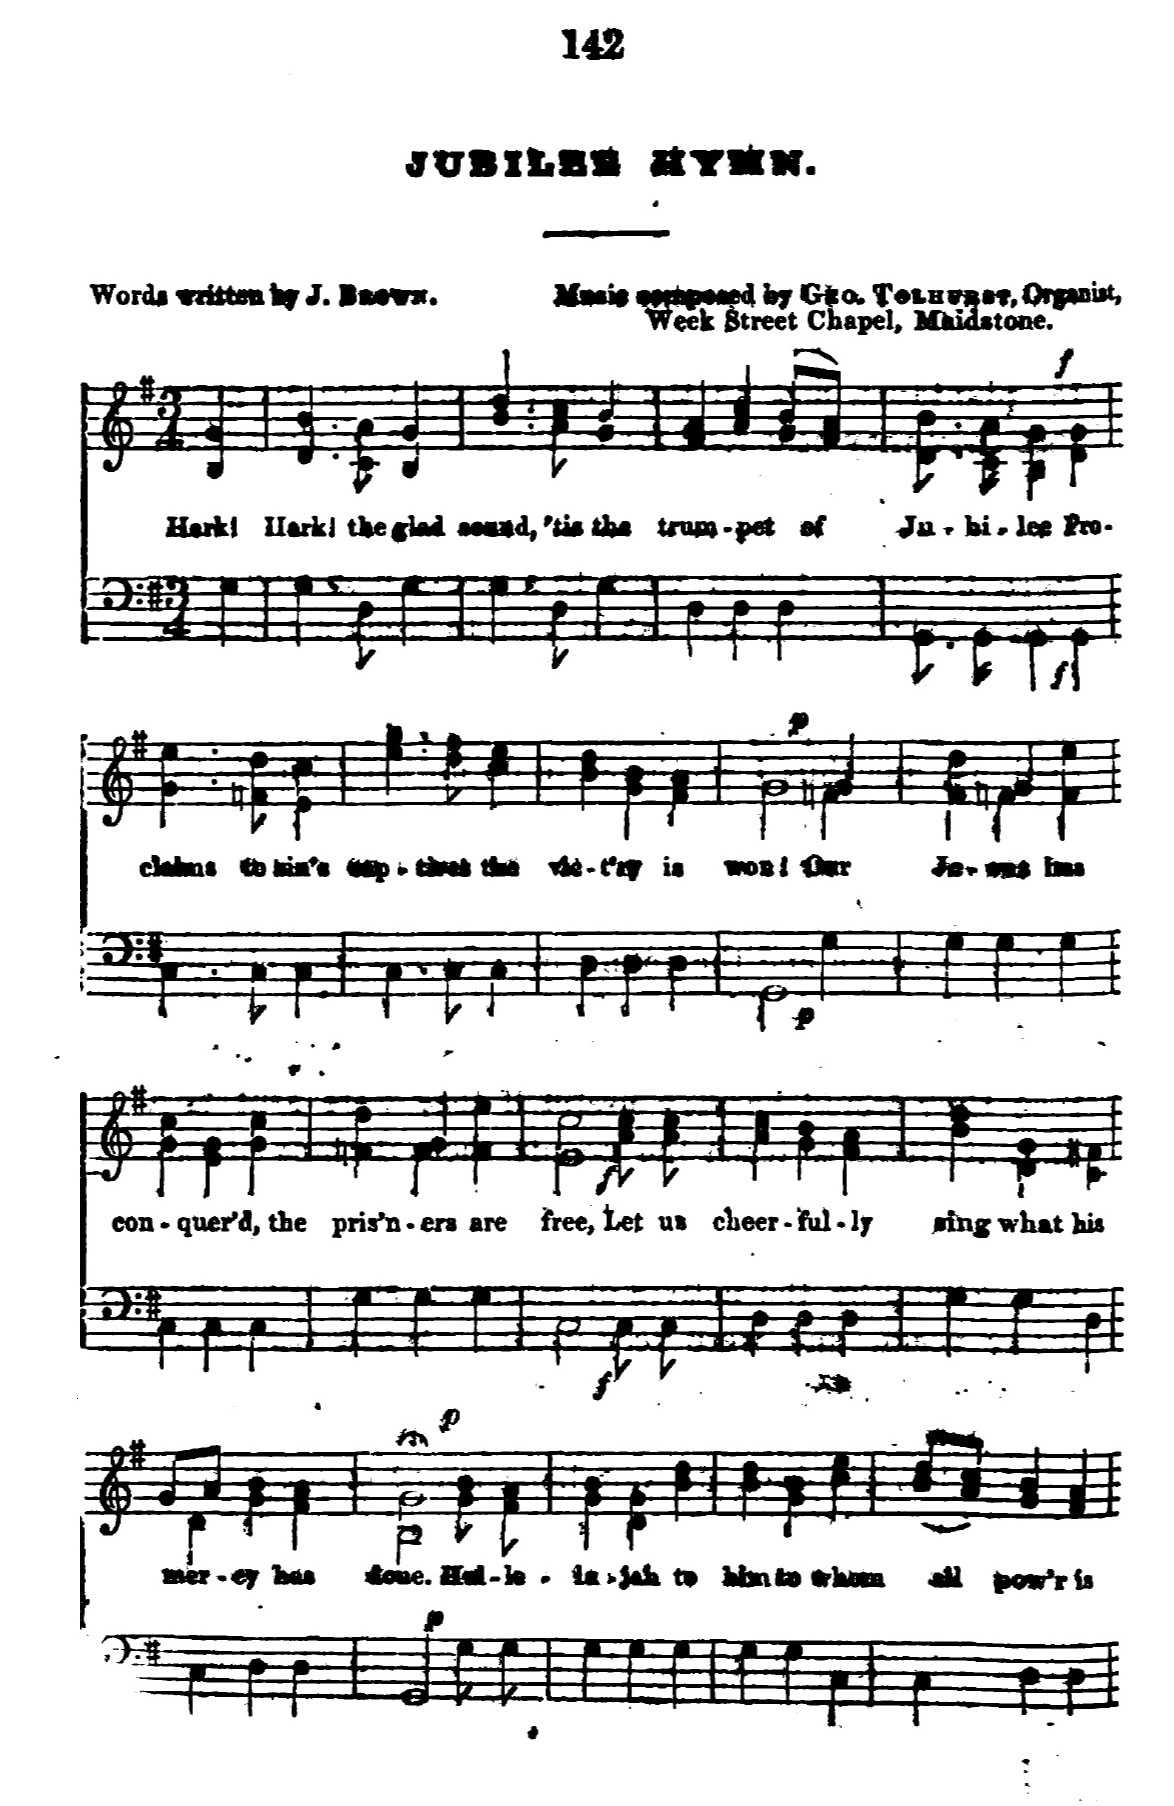 Jubilee hymn, words written by J. Brown; music composed by Geo. Tolhurst, Week Street Chapel, Maidstone, 1845, 1